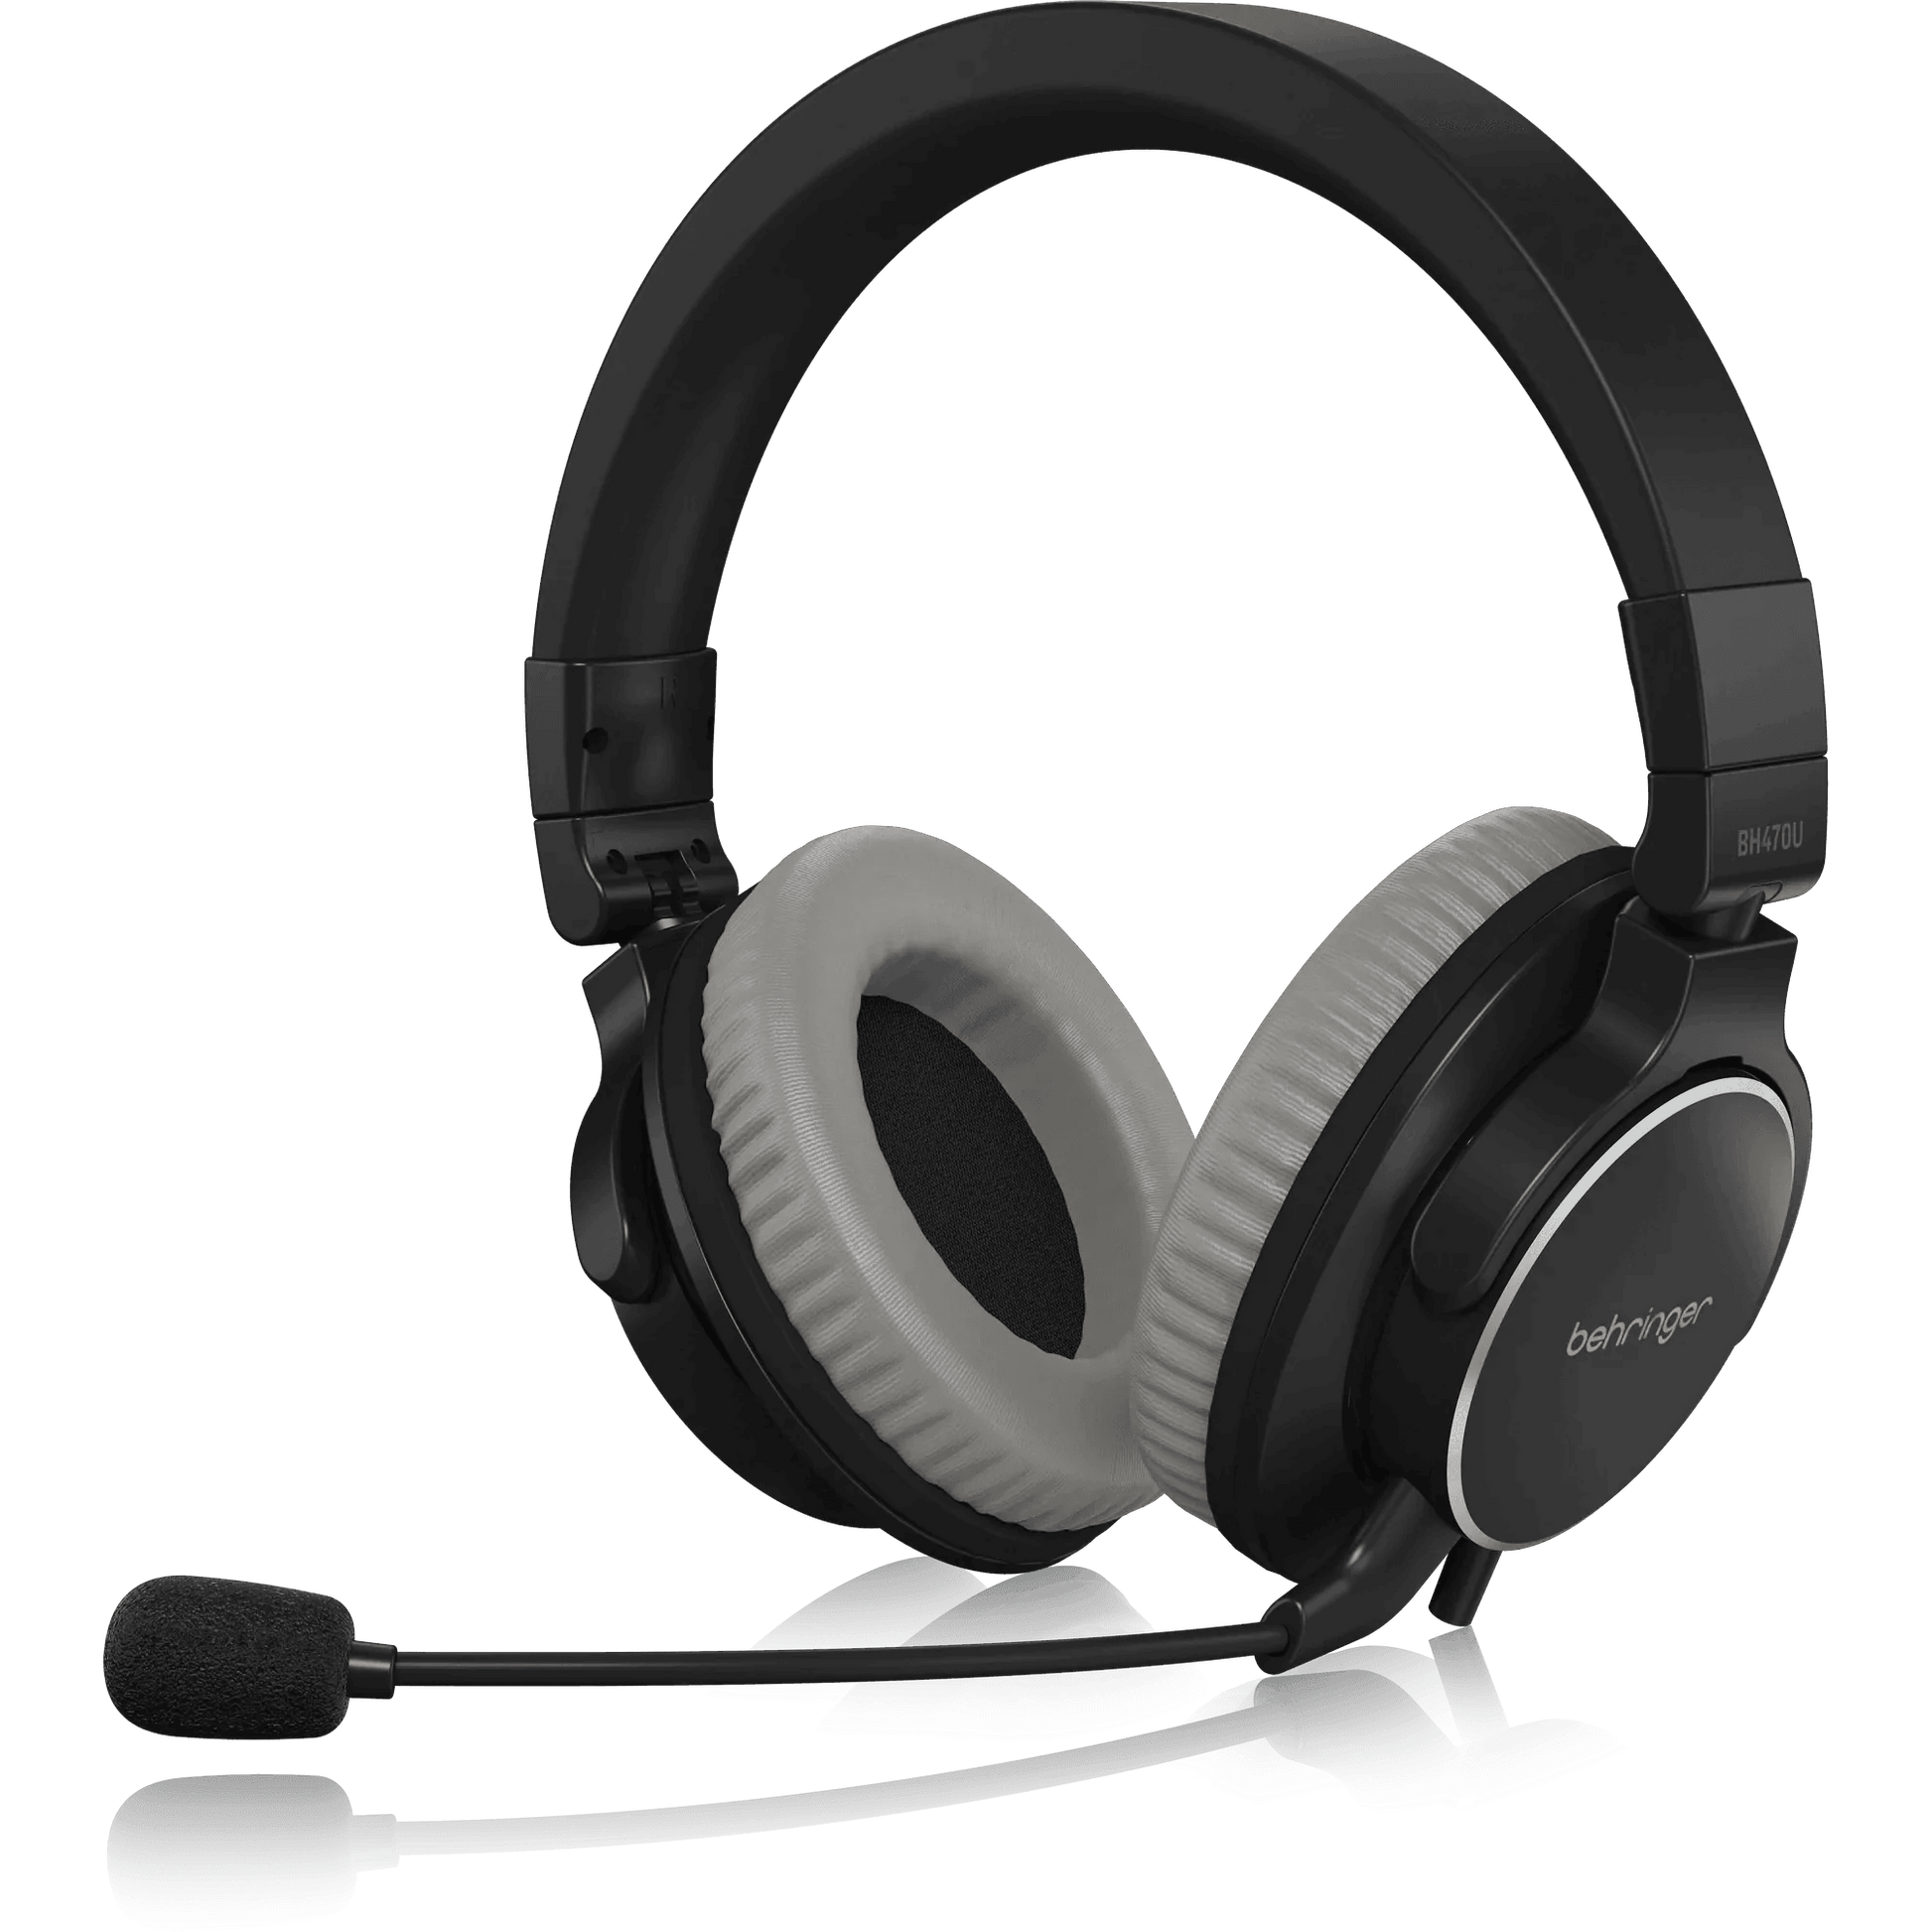 Behringer BH470U Headphones with Detachable Mic